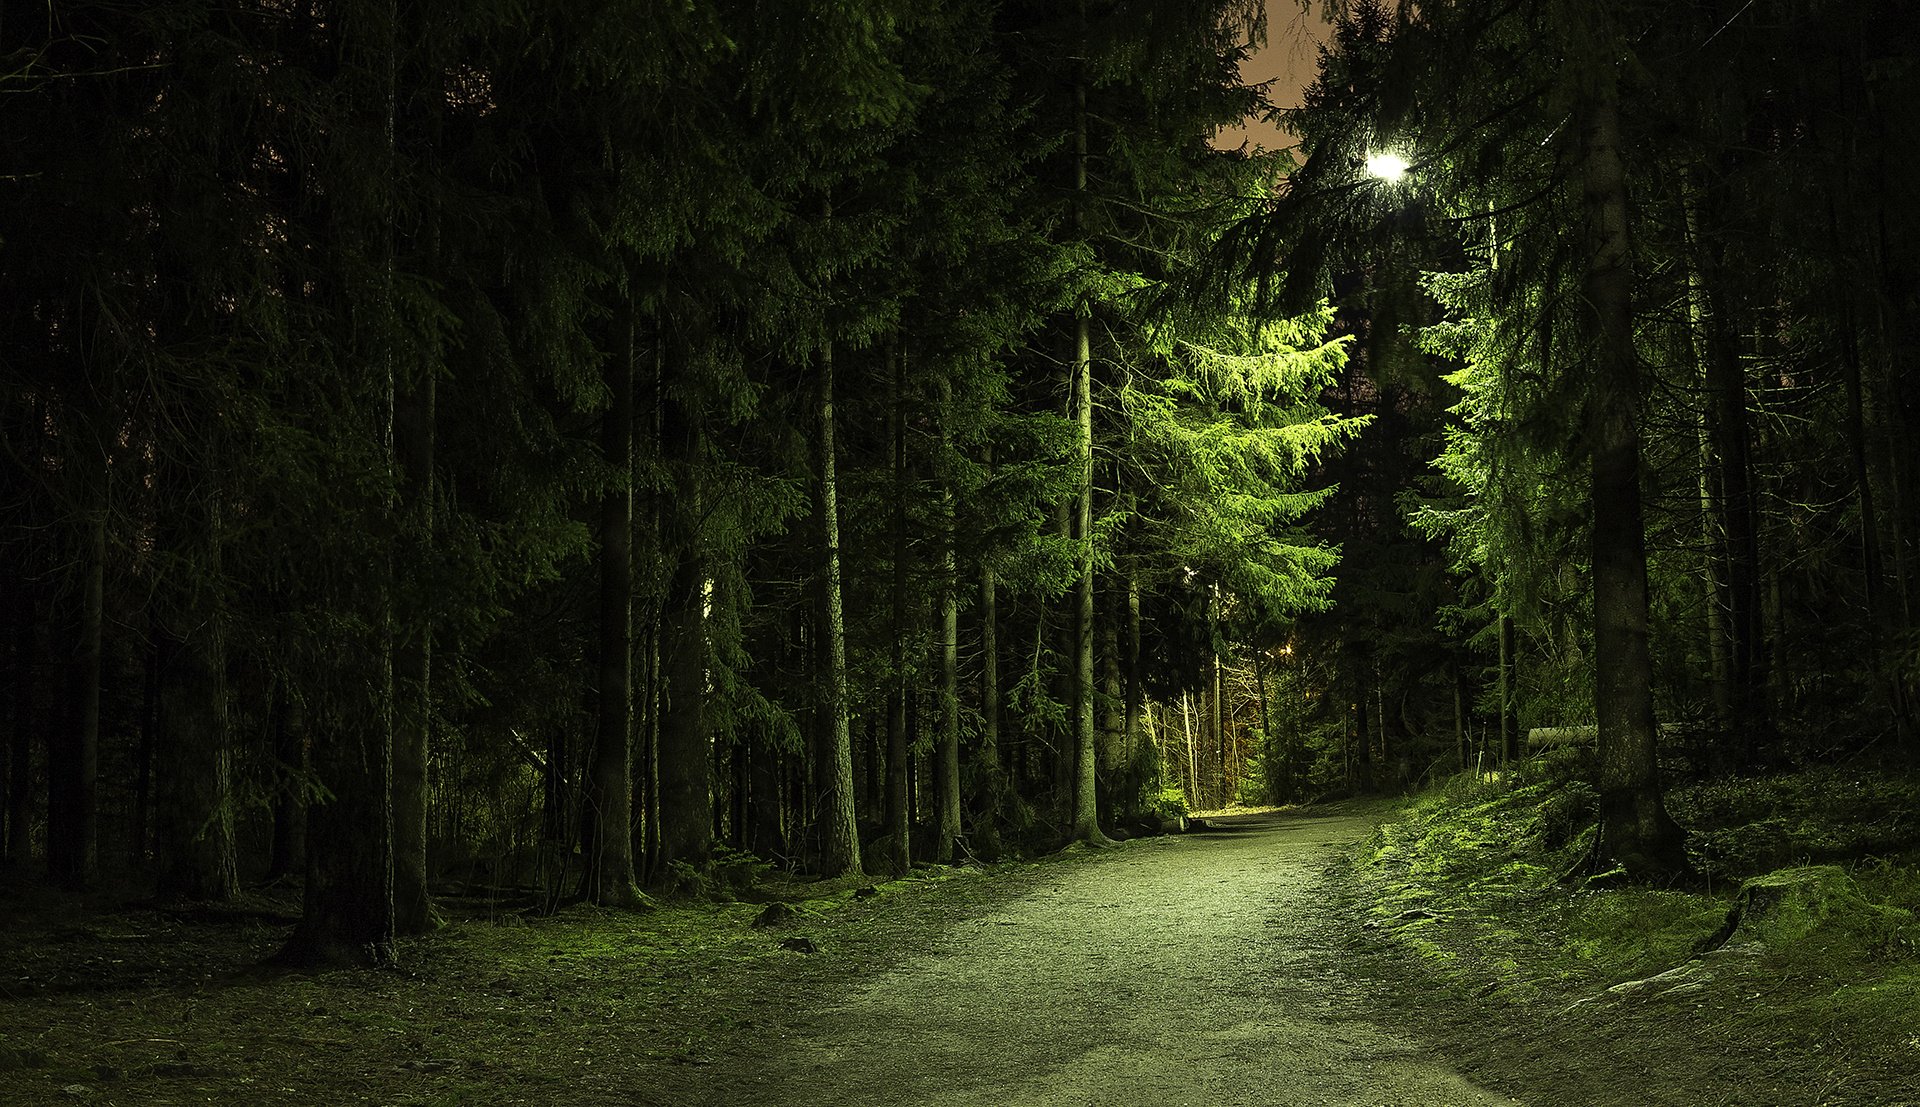 Forest Park Road Derevtya Night Light Lamp